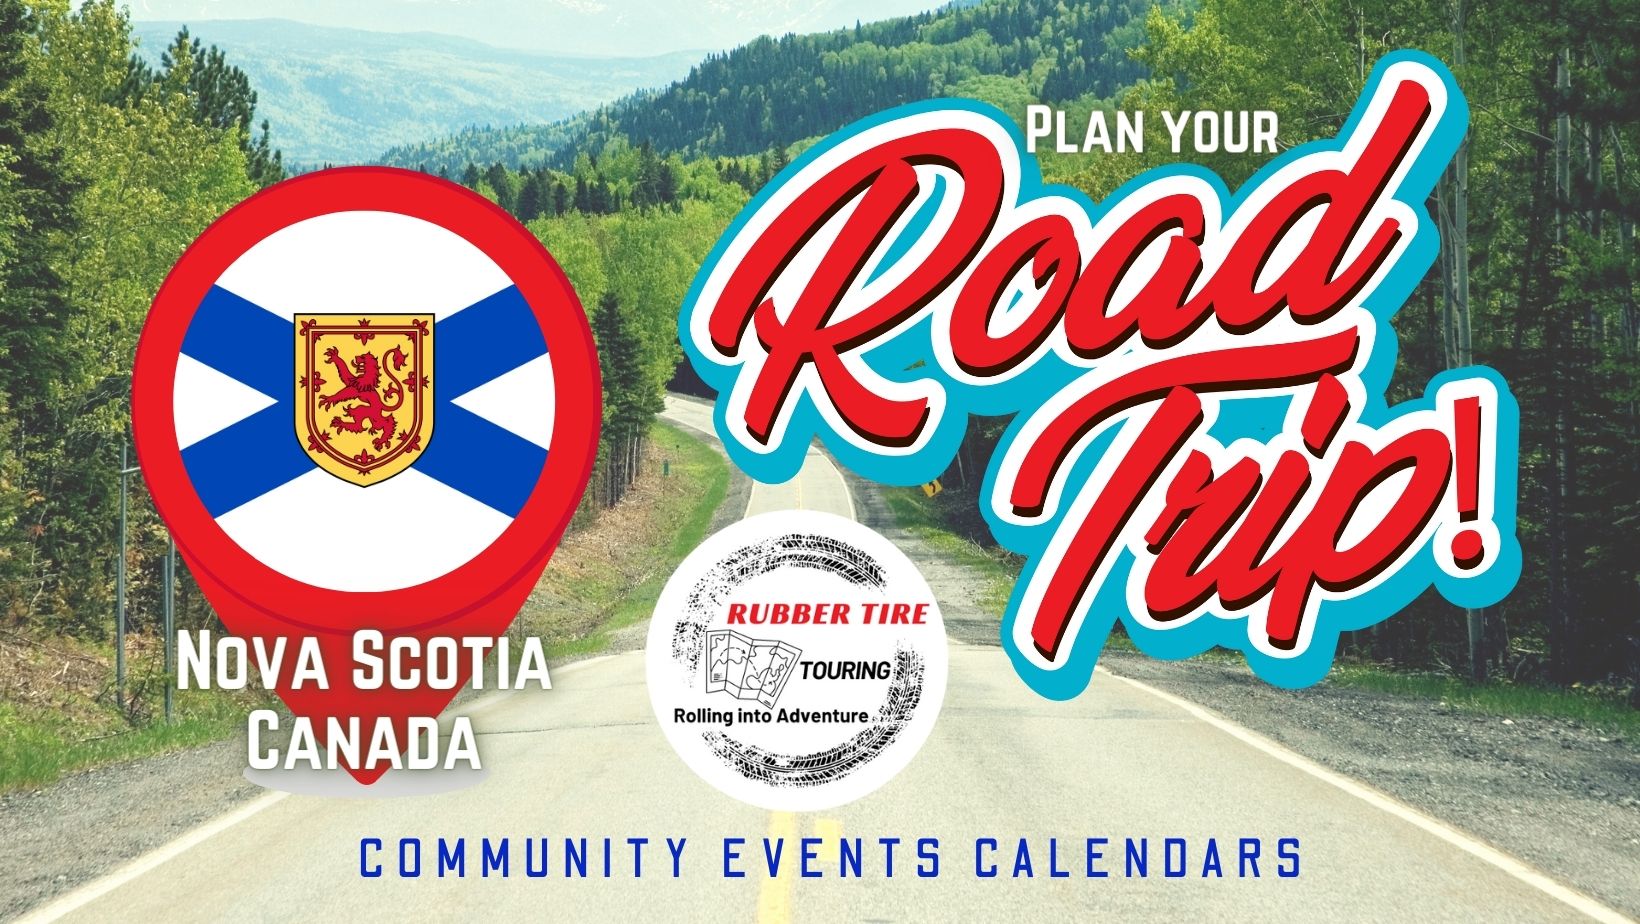 NS Events Calendar - Plan your road trip!